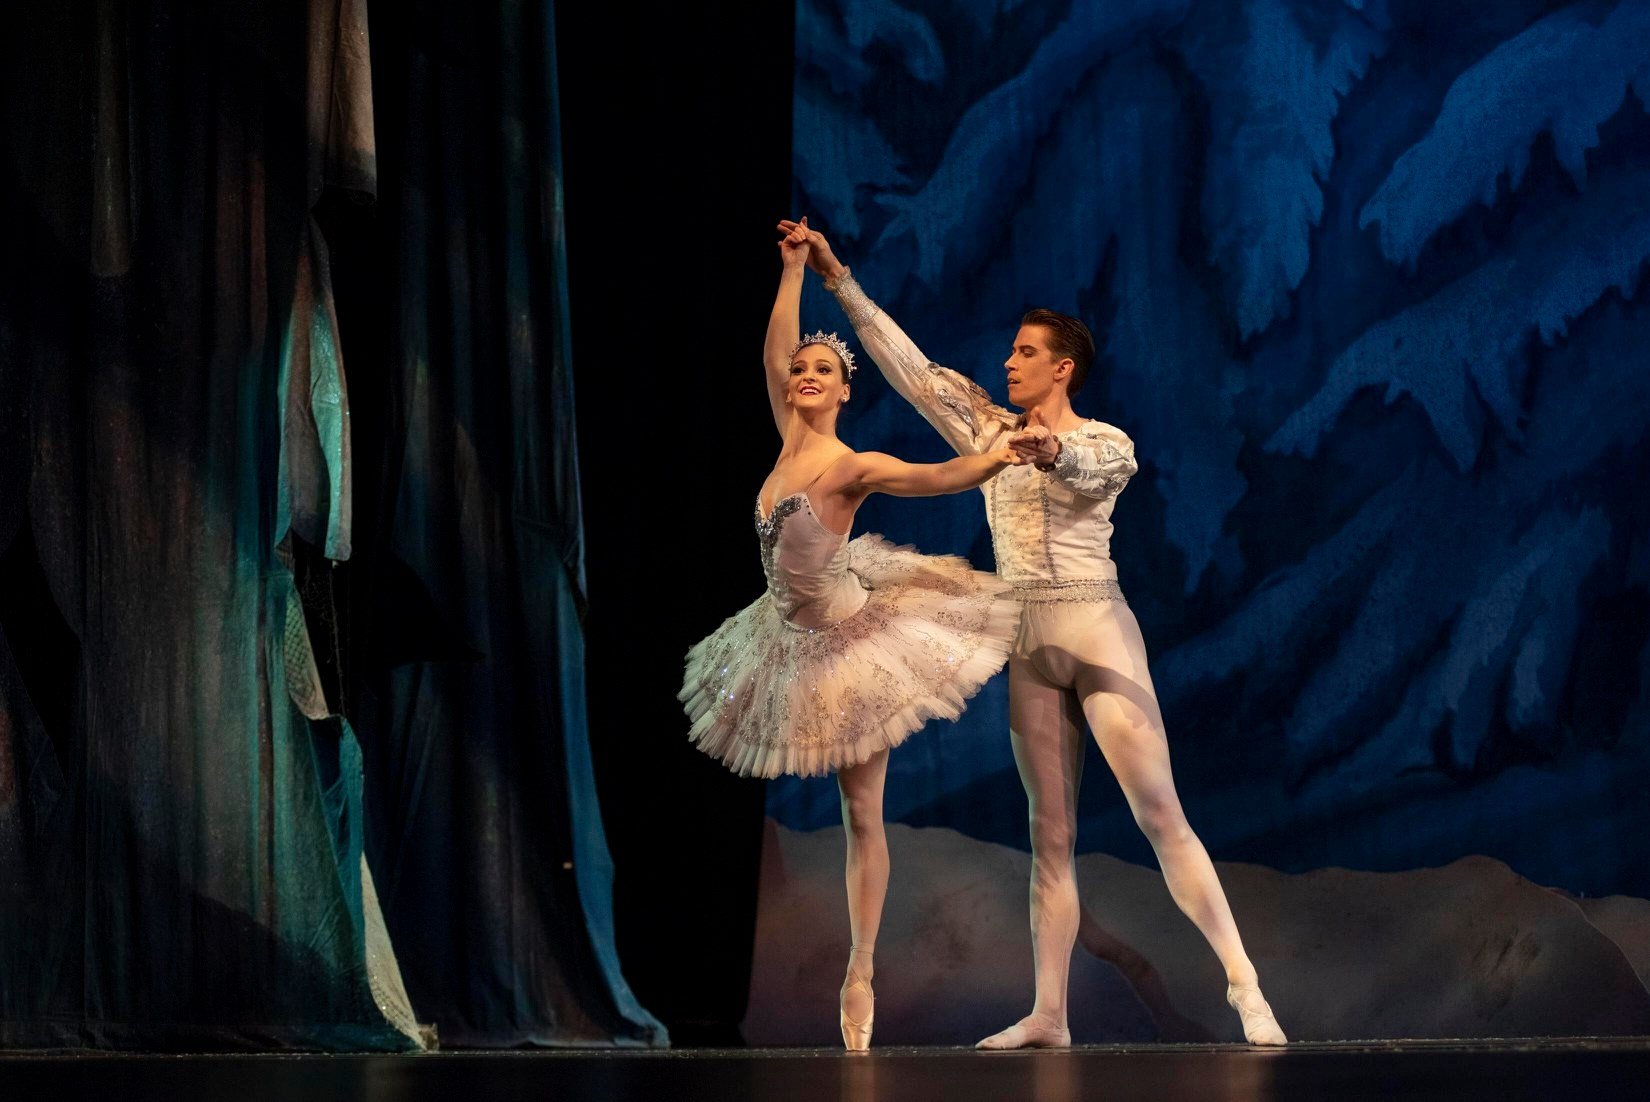 The Columbia City Ballet